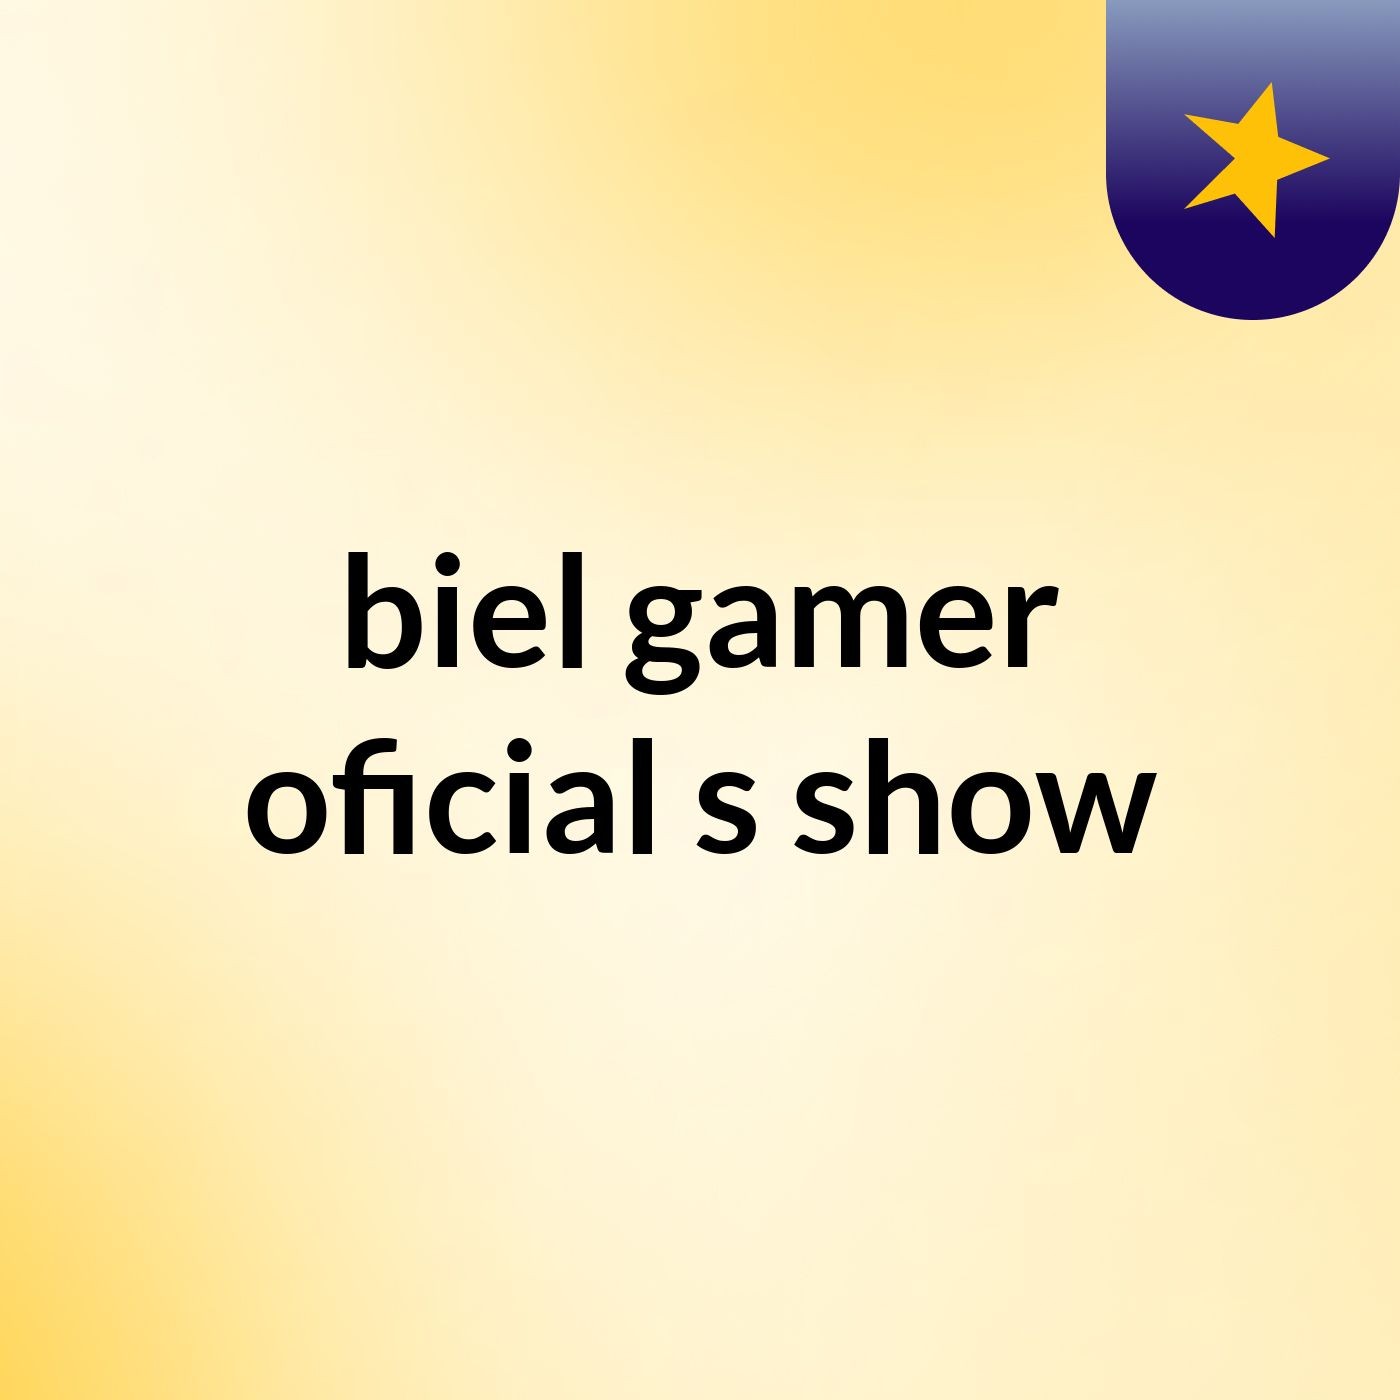 biel gamer oficial's show